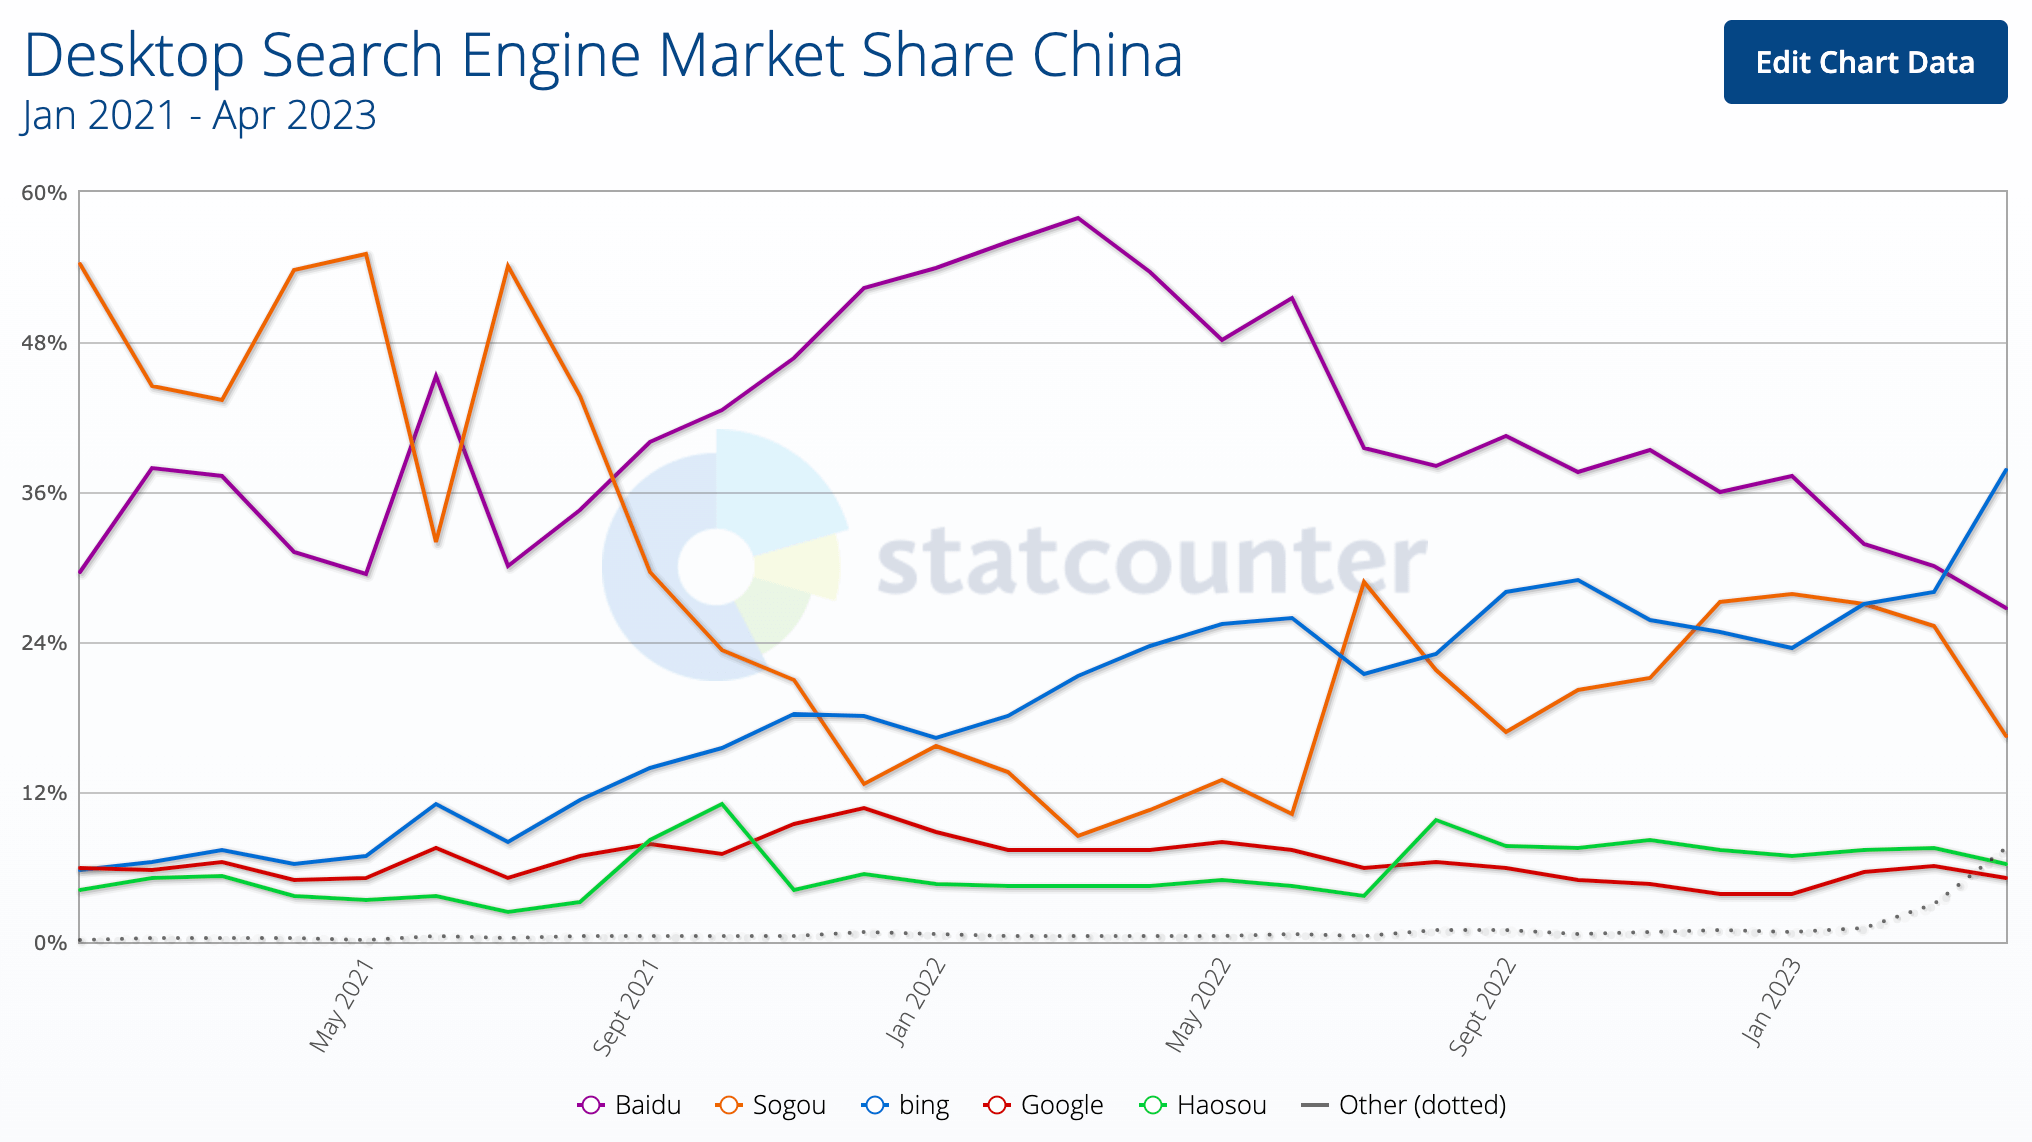 GS-Statcounter's Desktop Search Engine Market Share in China - Bing overcoming Baidu